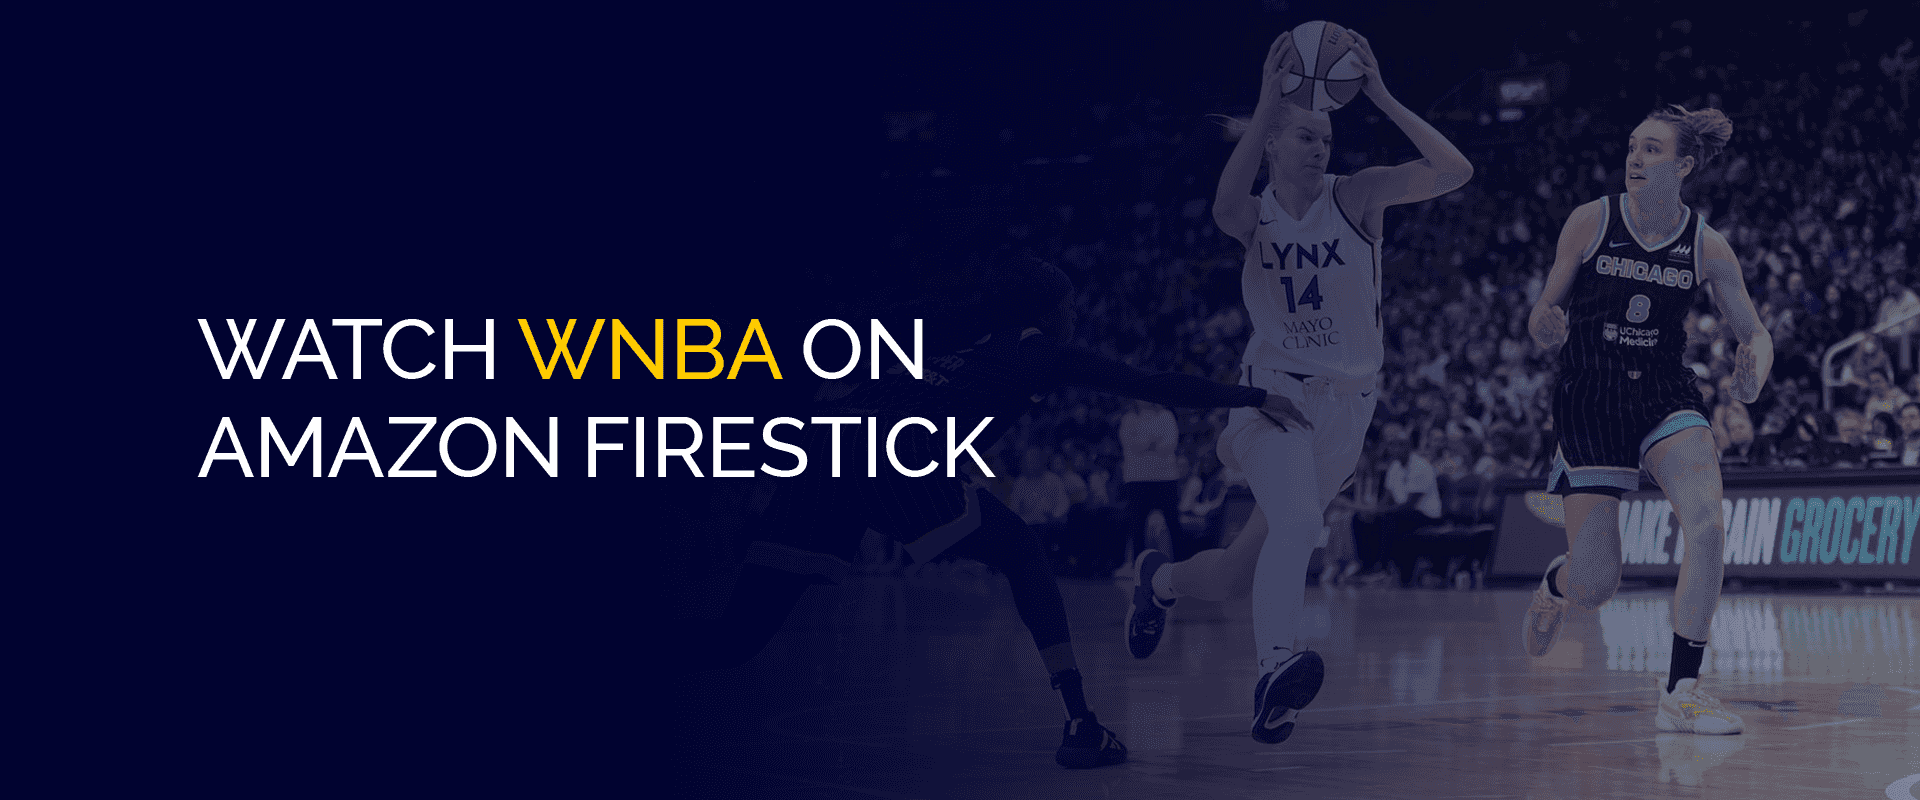 Mira la WNBA en Amazon Firestick